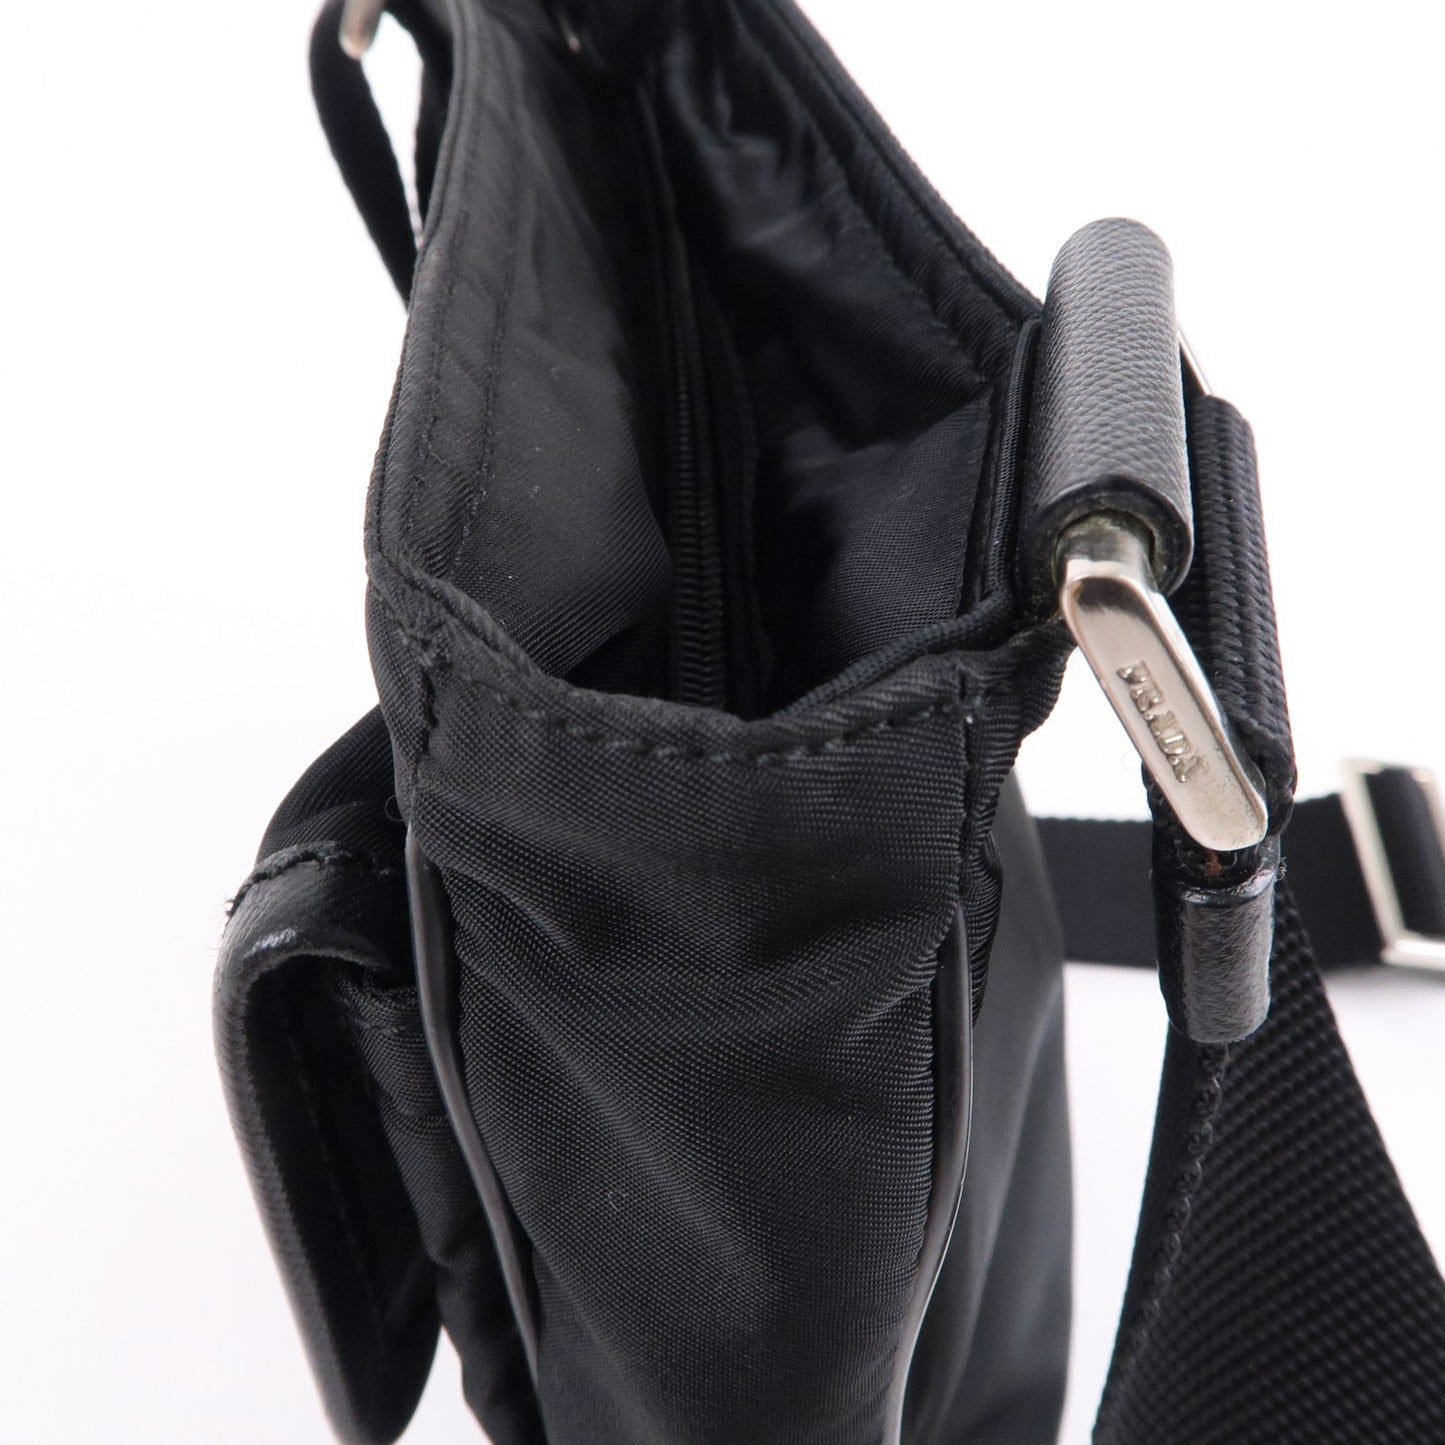 PRADA Logo Nylon Leather Shoulder Bag Crossbody Bag Black VA0270